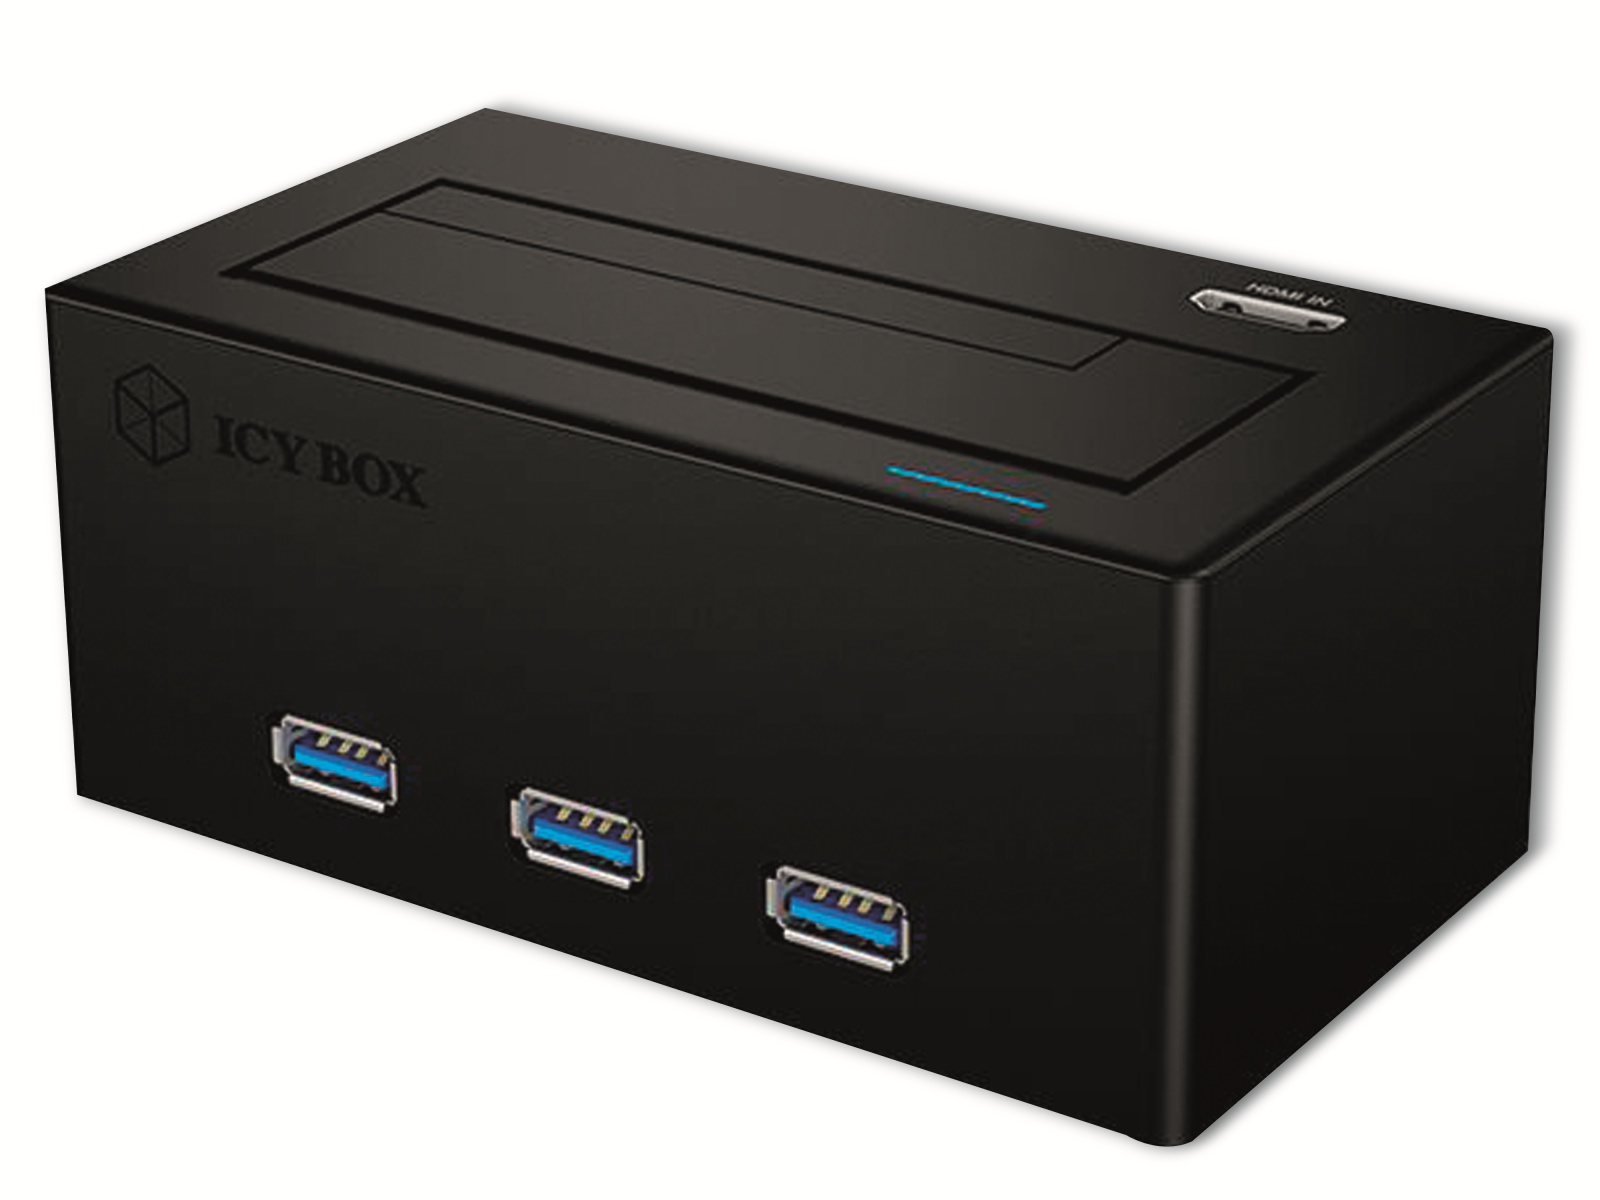 ICY BOX Festplattendockingstation IB-118U3-SPC